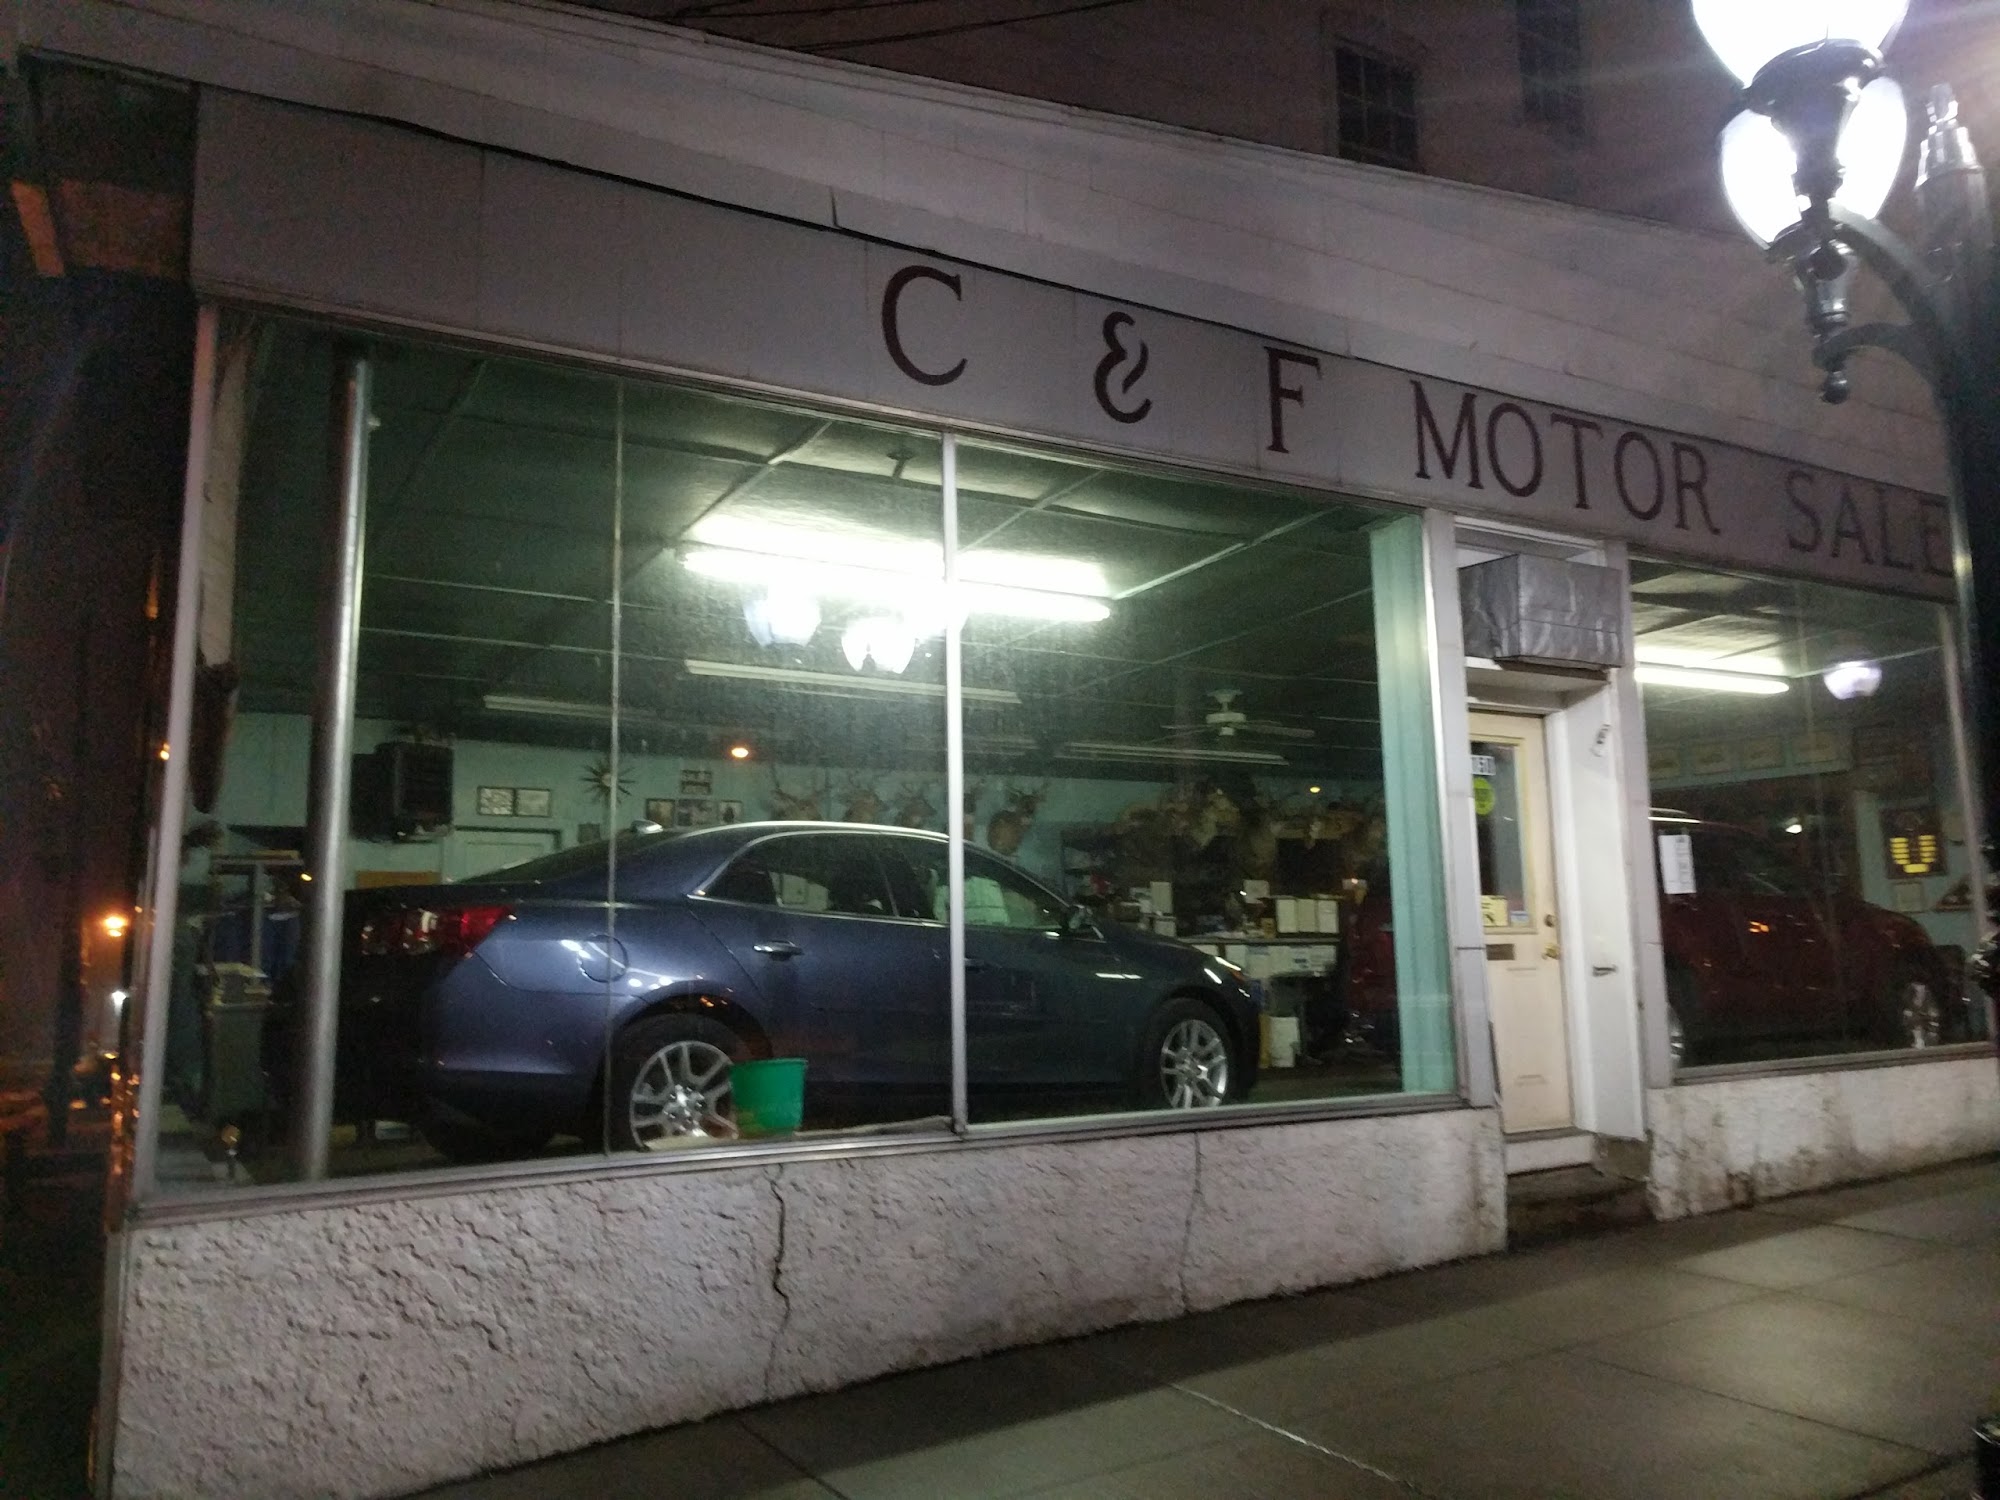 C & F Motor Sales